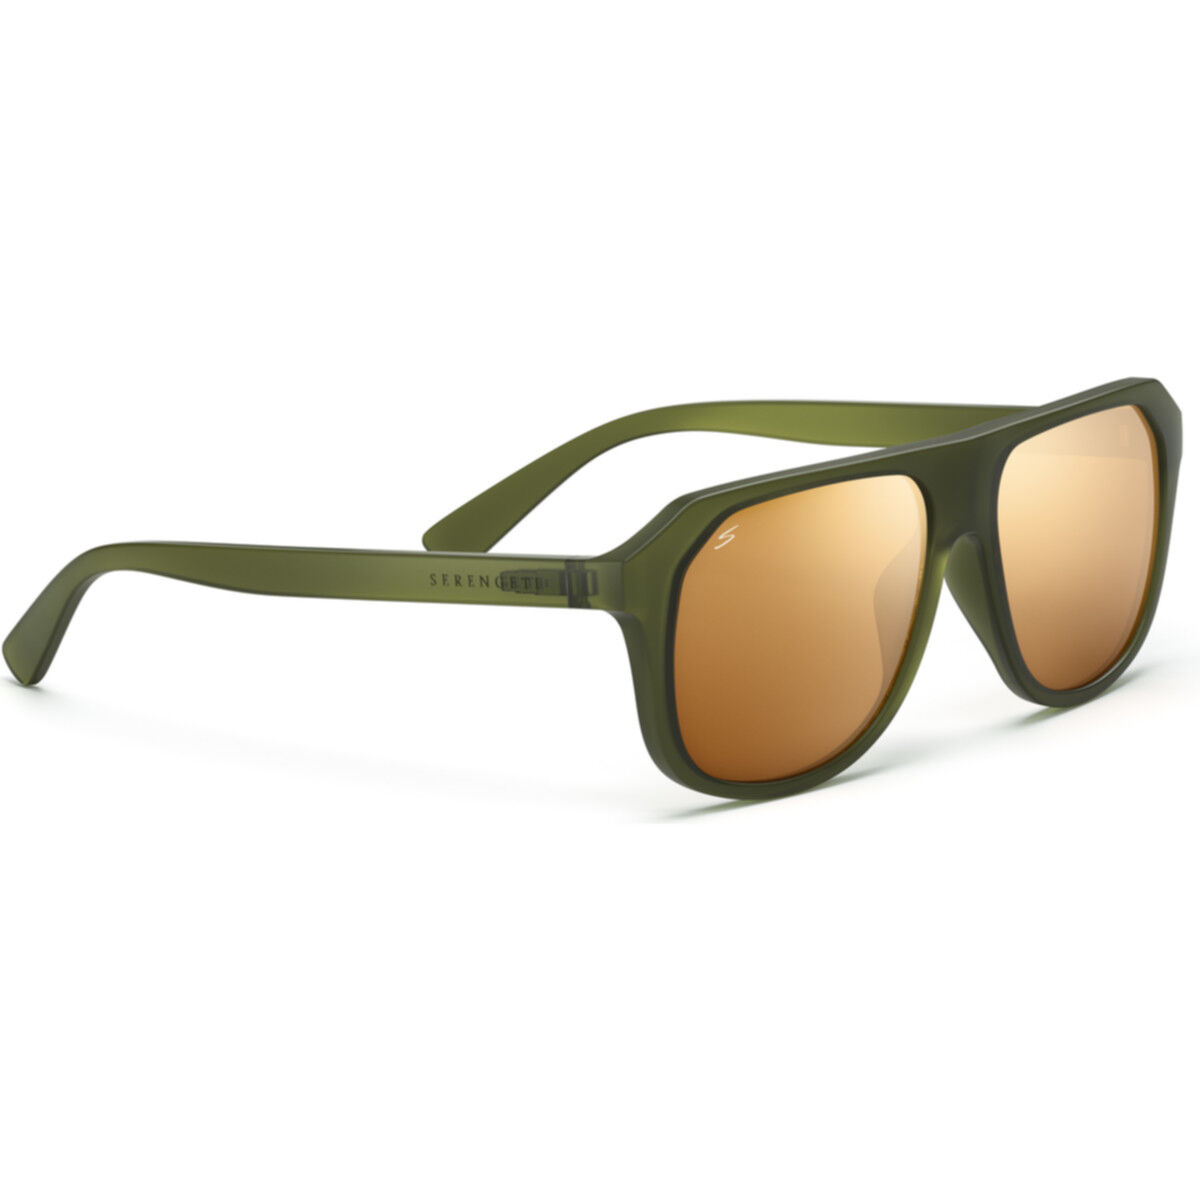 Buy Serengeti Sunglasses | Vision Direct Australia